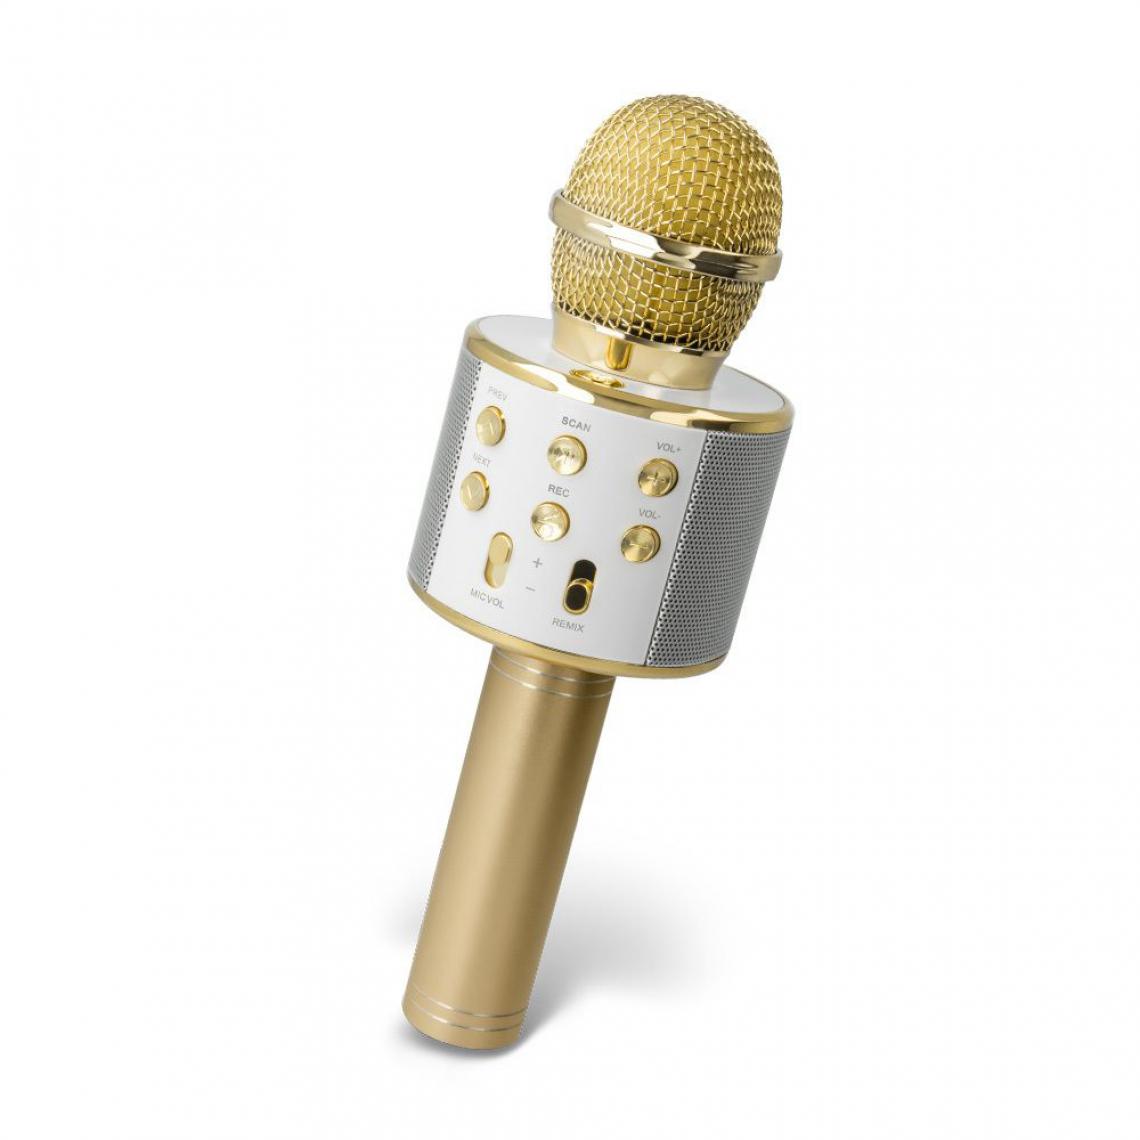 Ozzzo - Microphone Karaoke bluetooth haut parleur ozzzo Gold Or pour Asus ROG Phone 2 - Autres accessoires smartphone